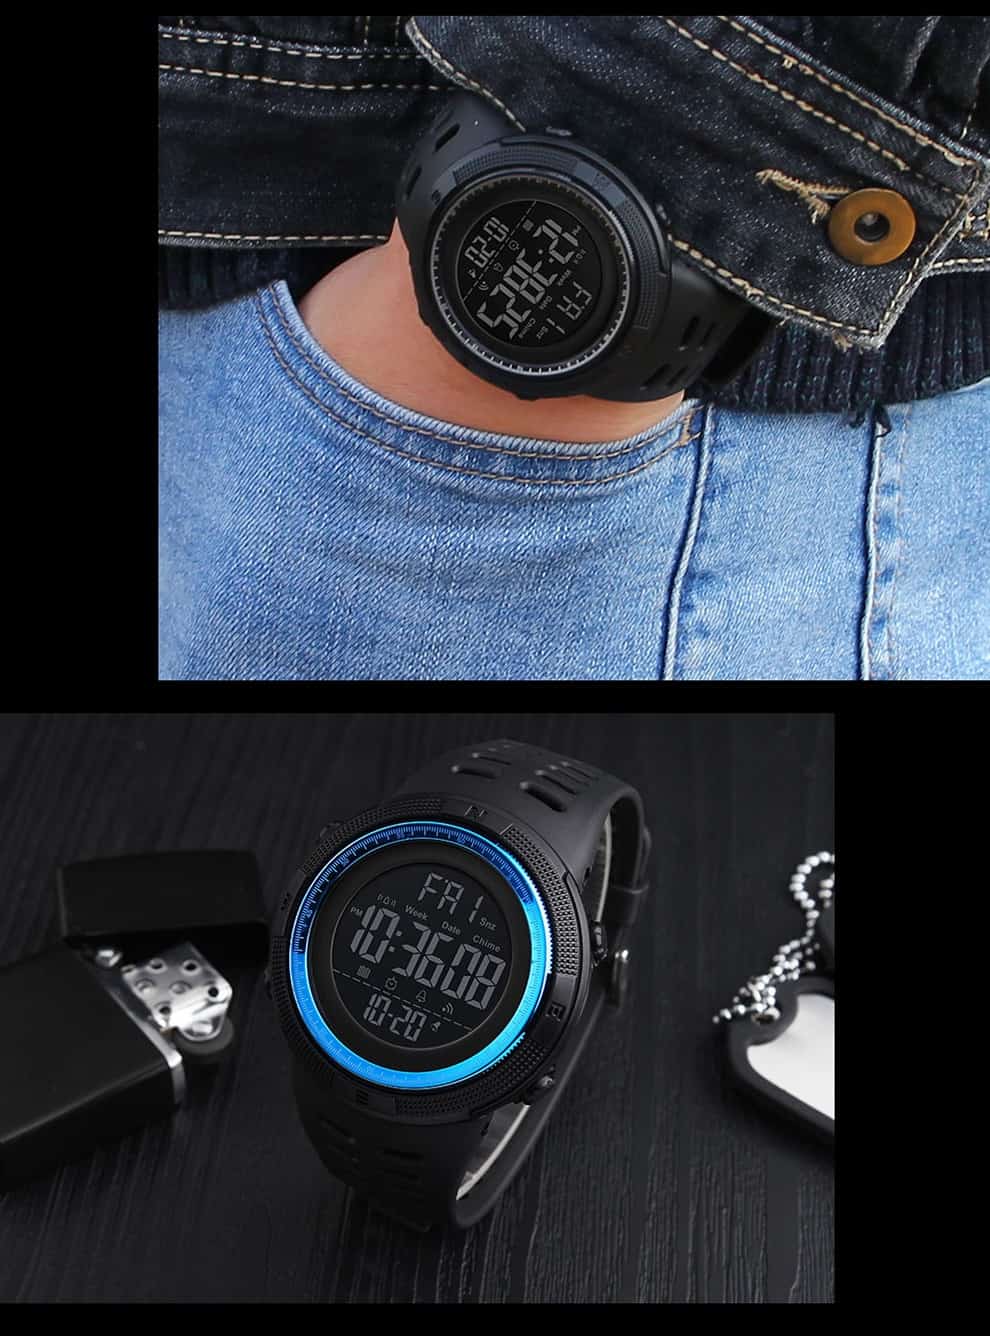 SKMEI Fashion Outdoor Sport Watch Men Multifunction Watches Alarm Clock Chrono 5Bar Waterproof Digital Watch reloj hombre 1251